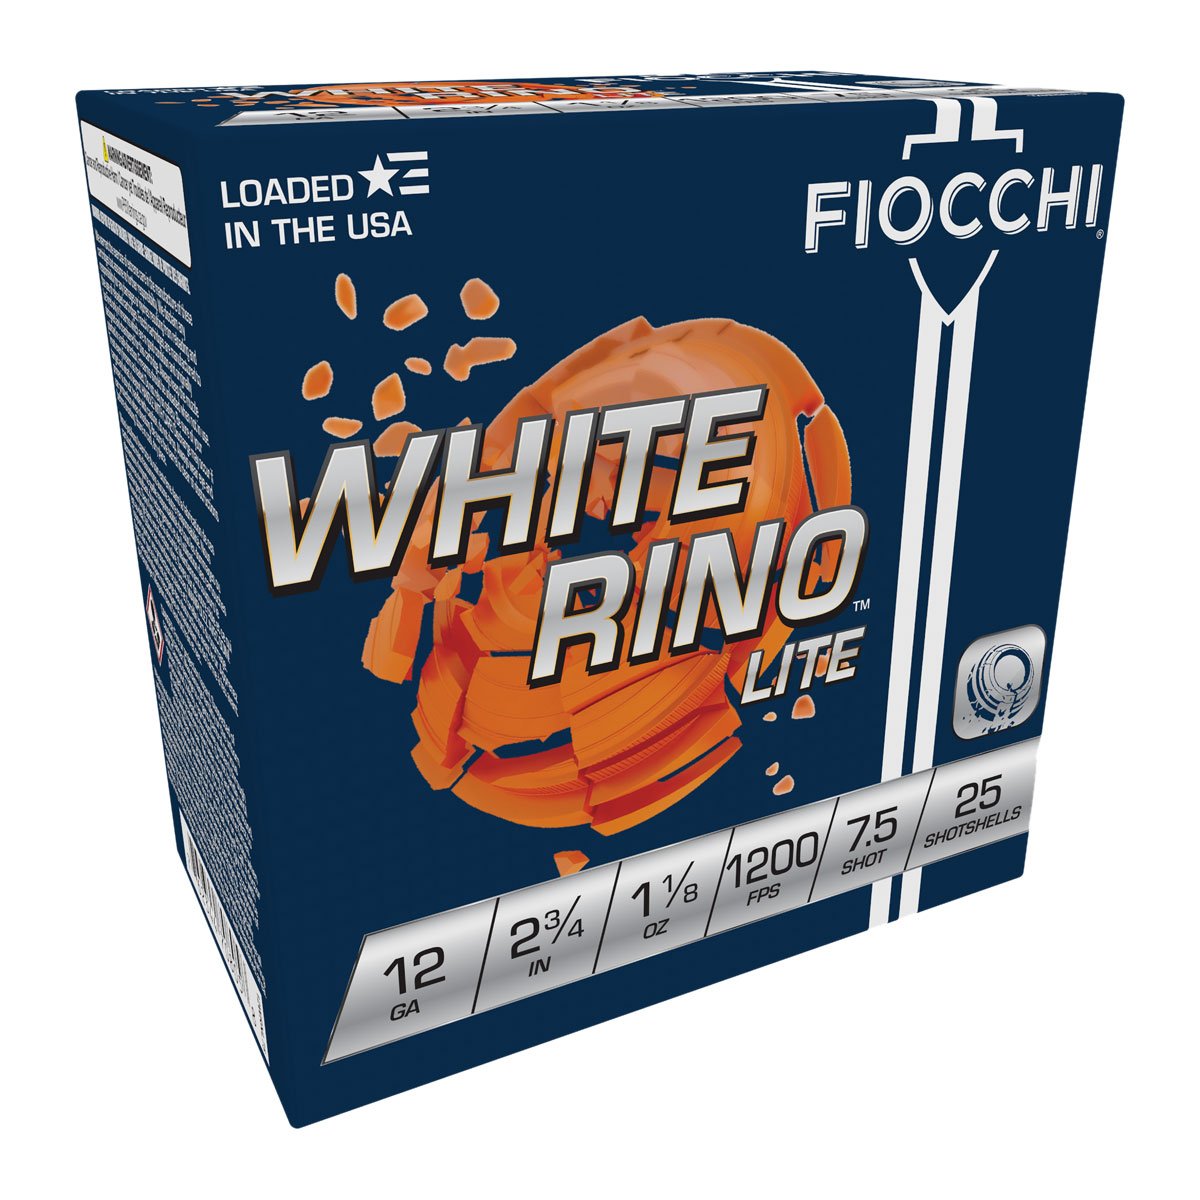 FIOCCHI AMMUNITION - WHITE RINO LITE 12 GAUGE AMMO